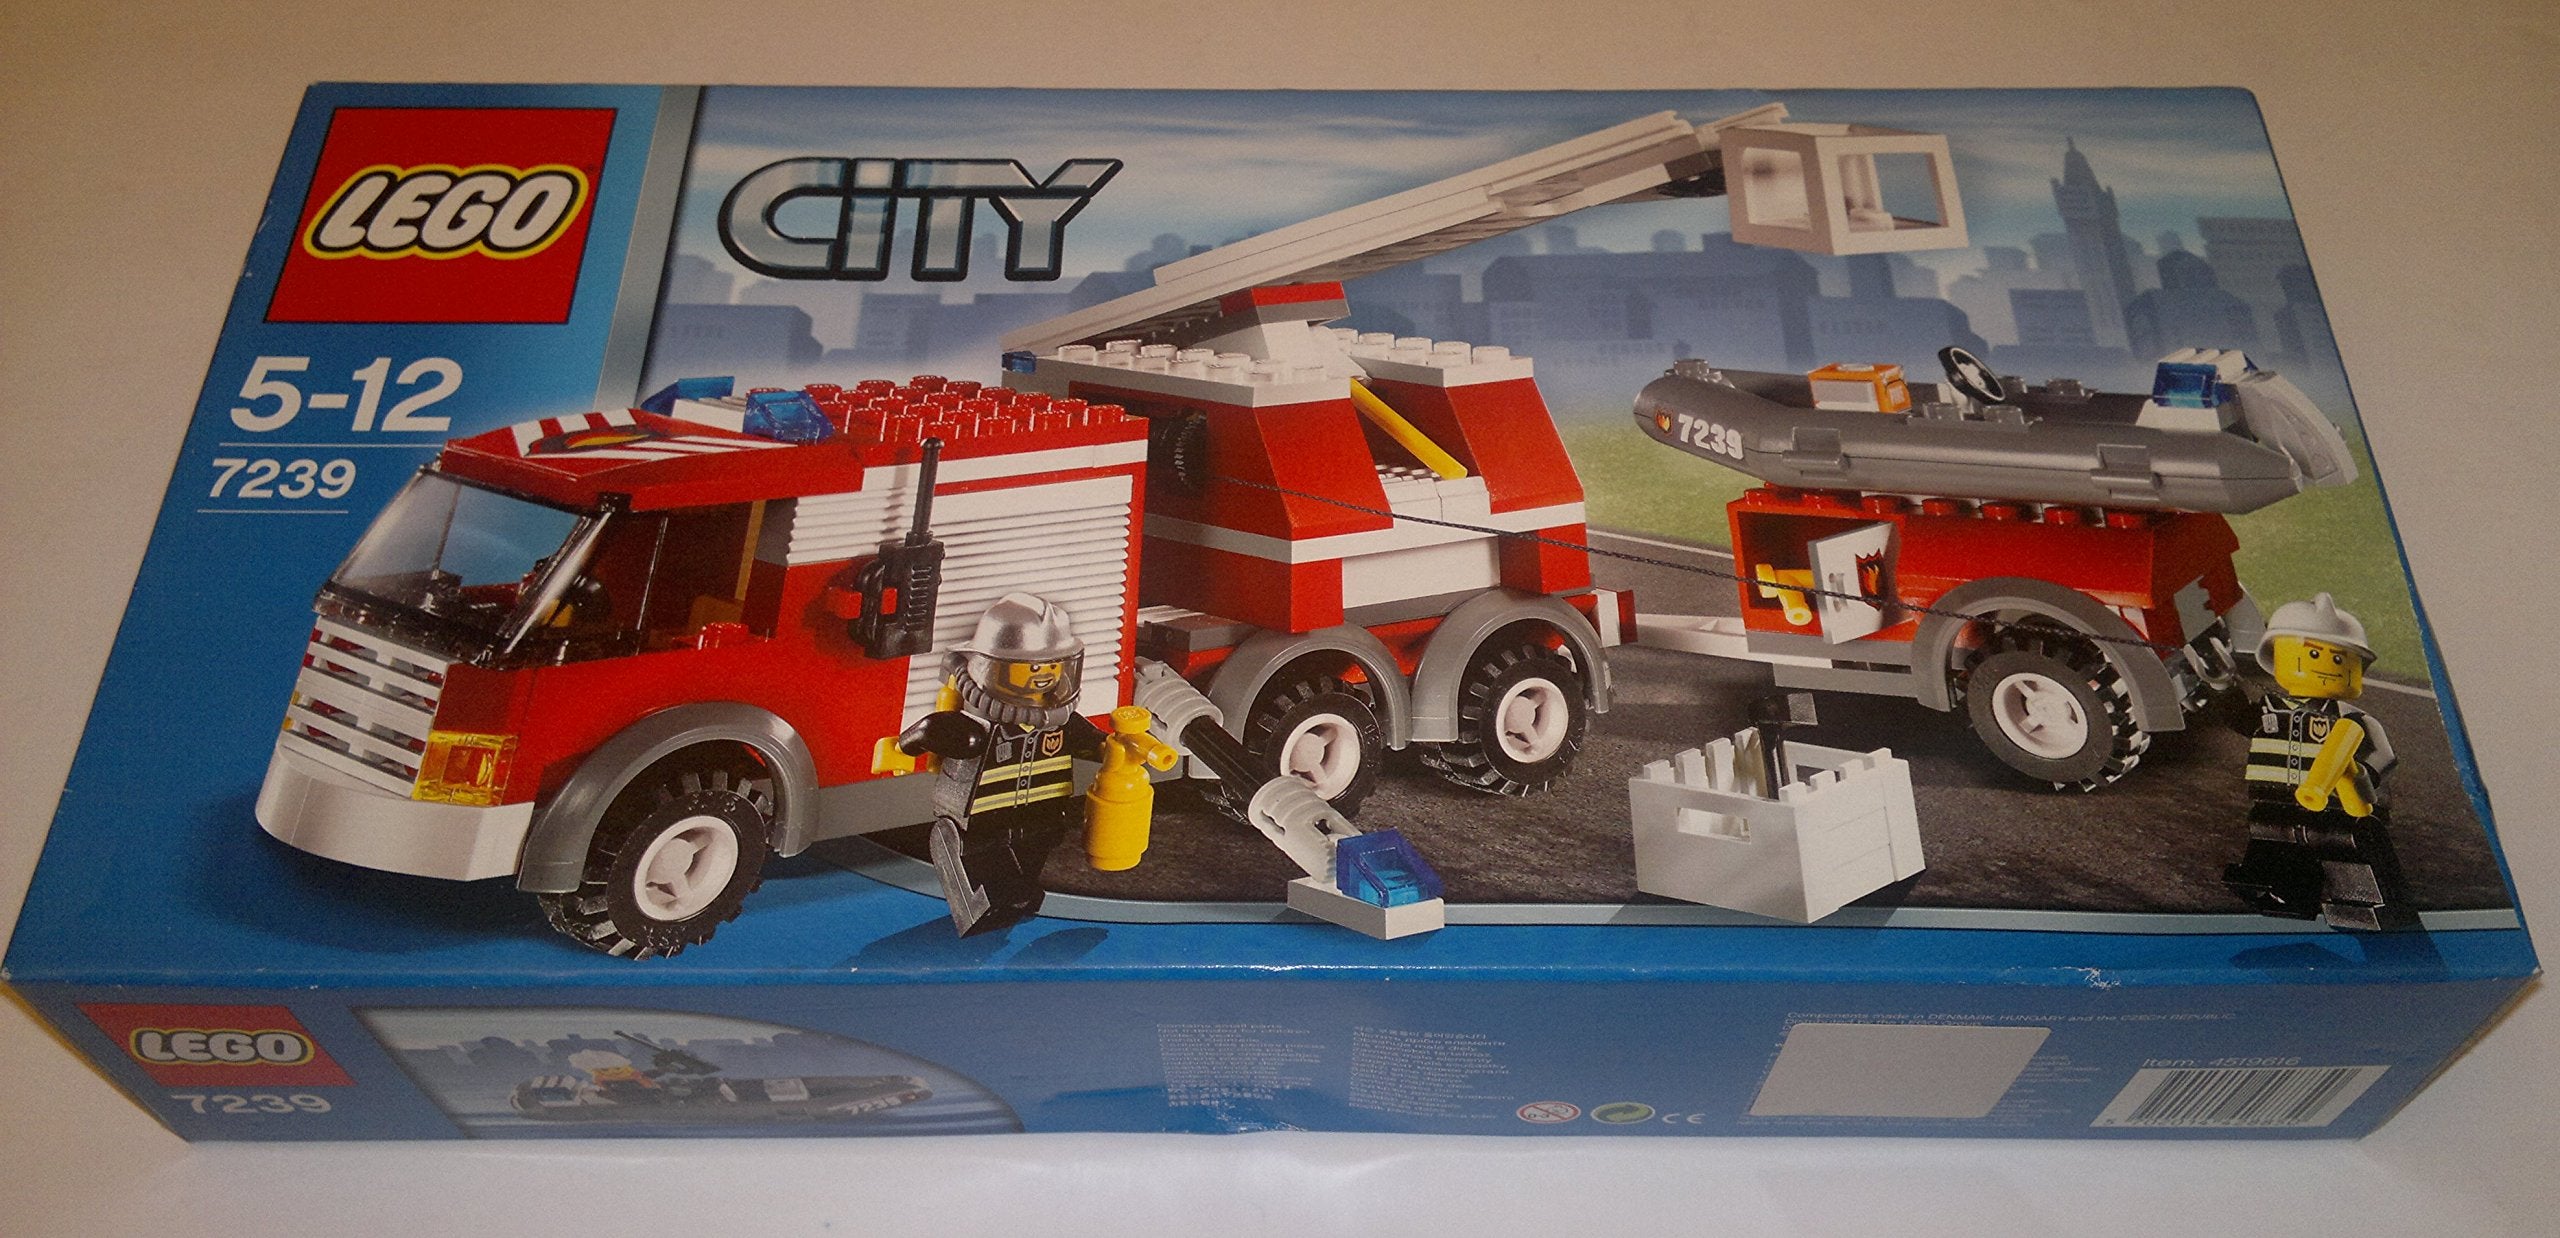 LEGO City 7239 Ladder Truck (Japan Import)